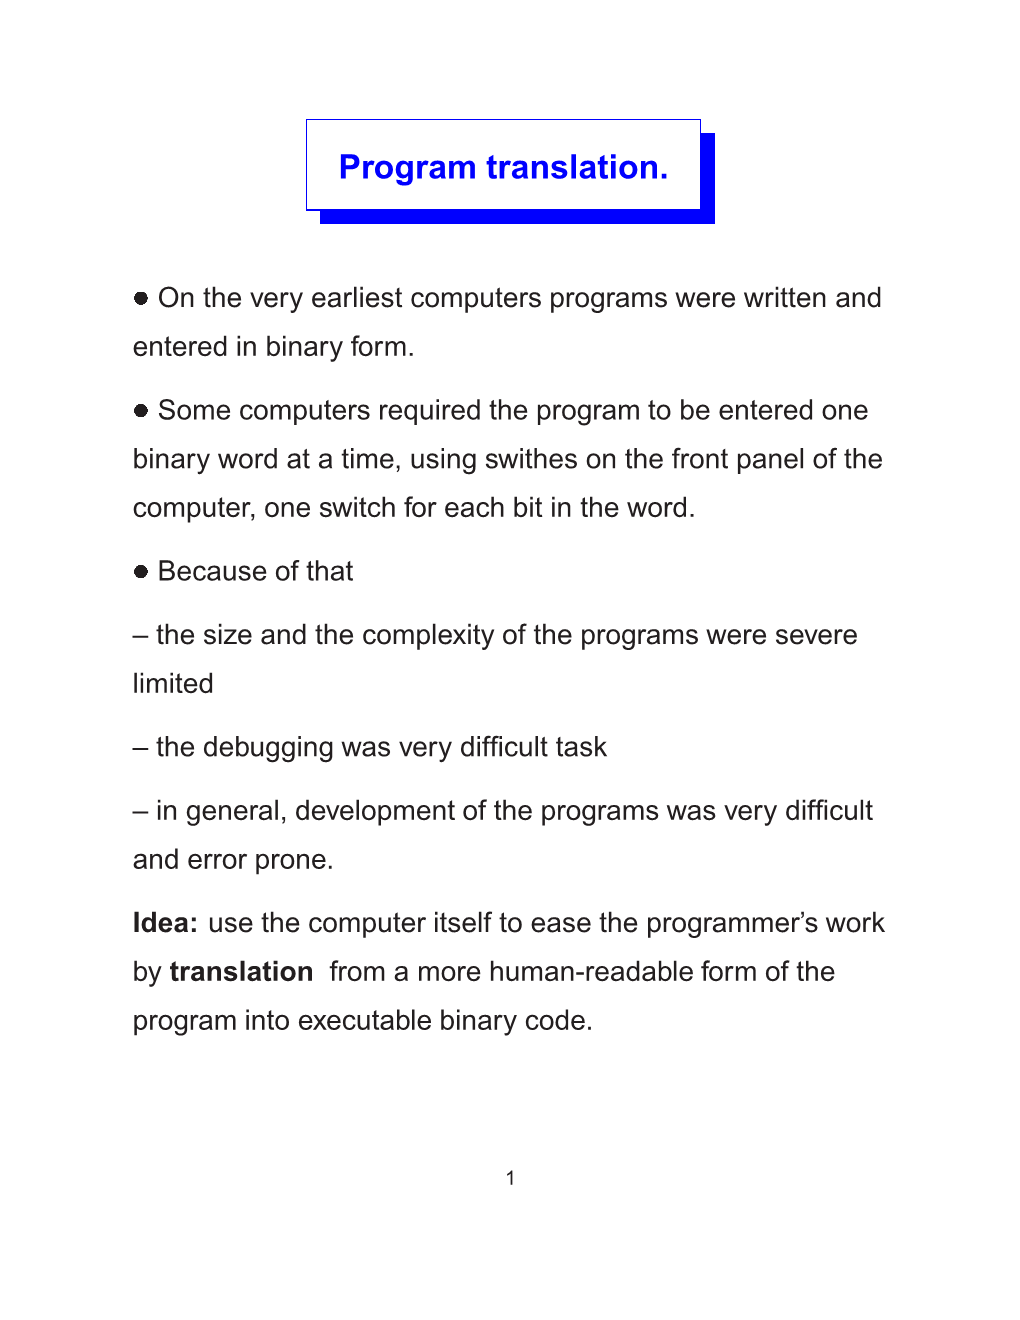 Program Translation